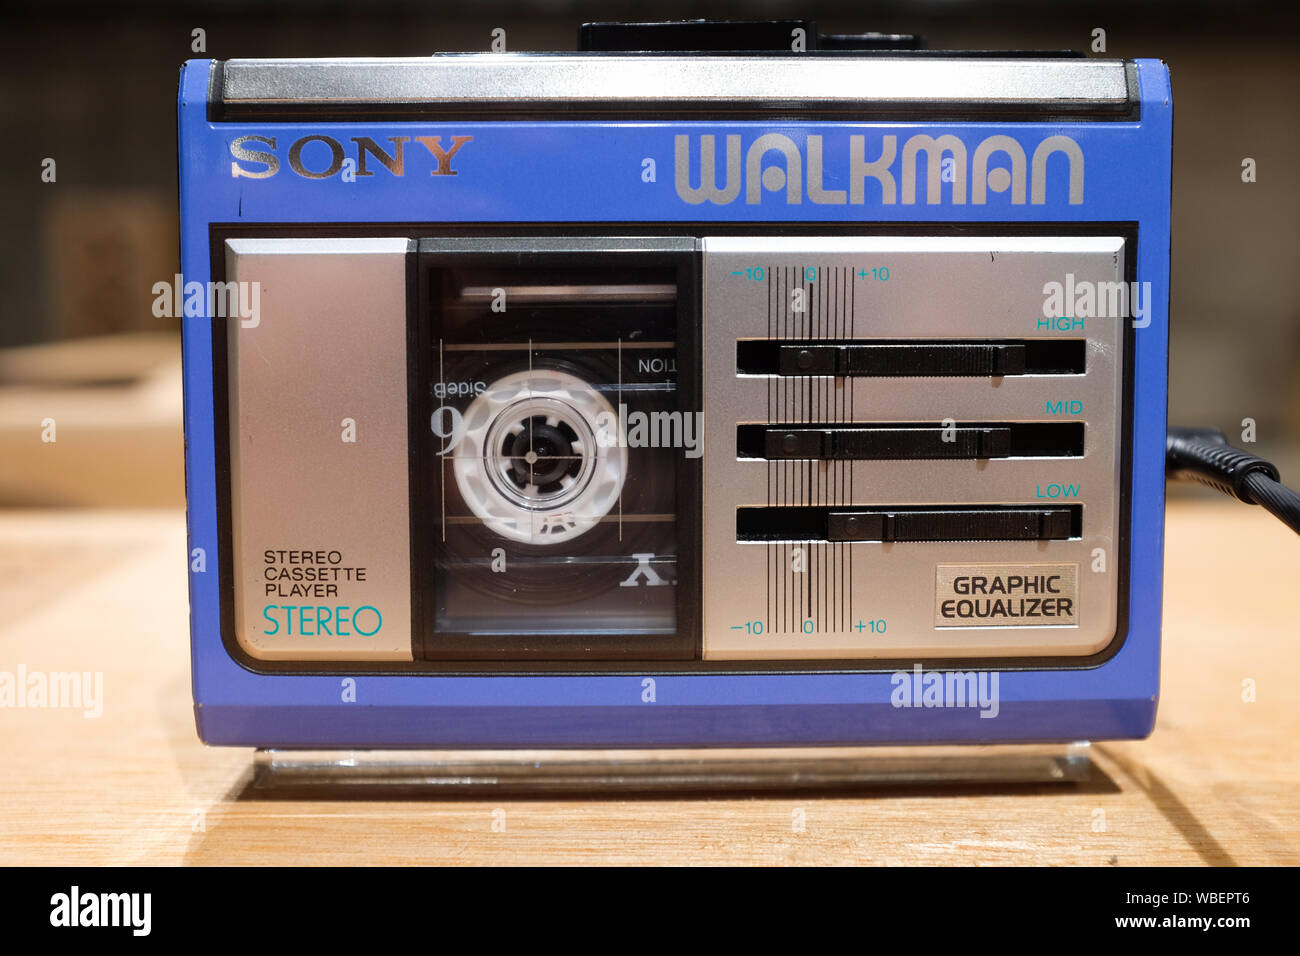 Sony Walkman WM-43 Portable Cassette Player